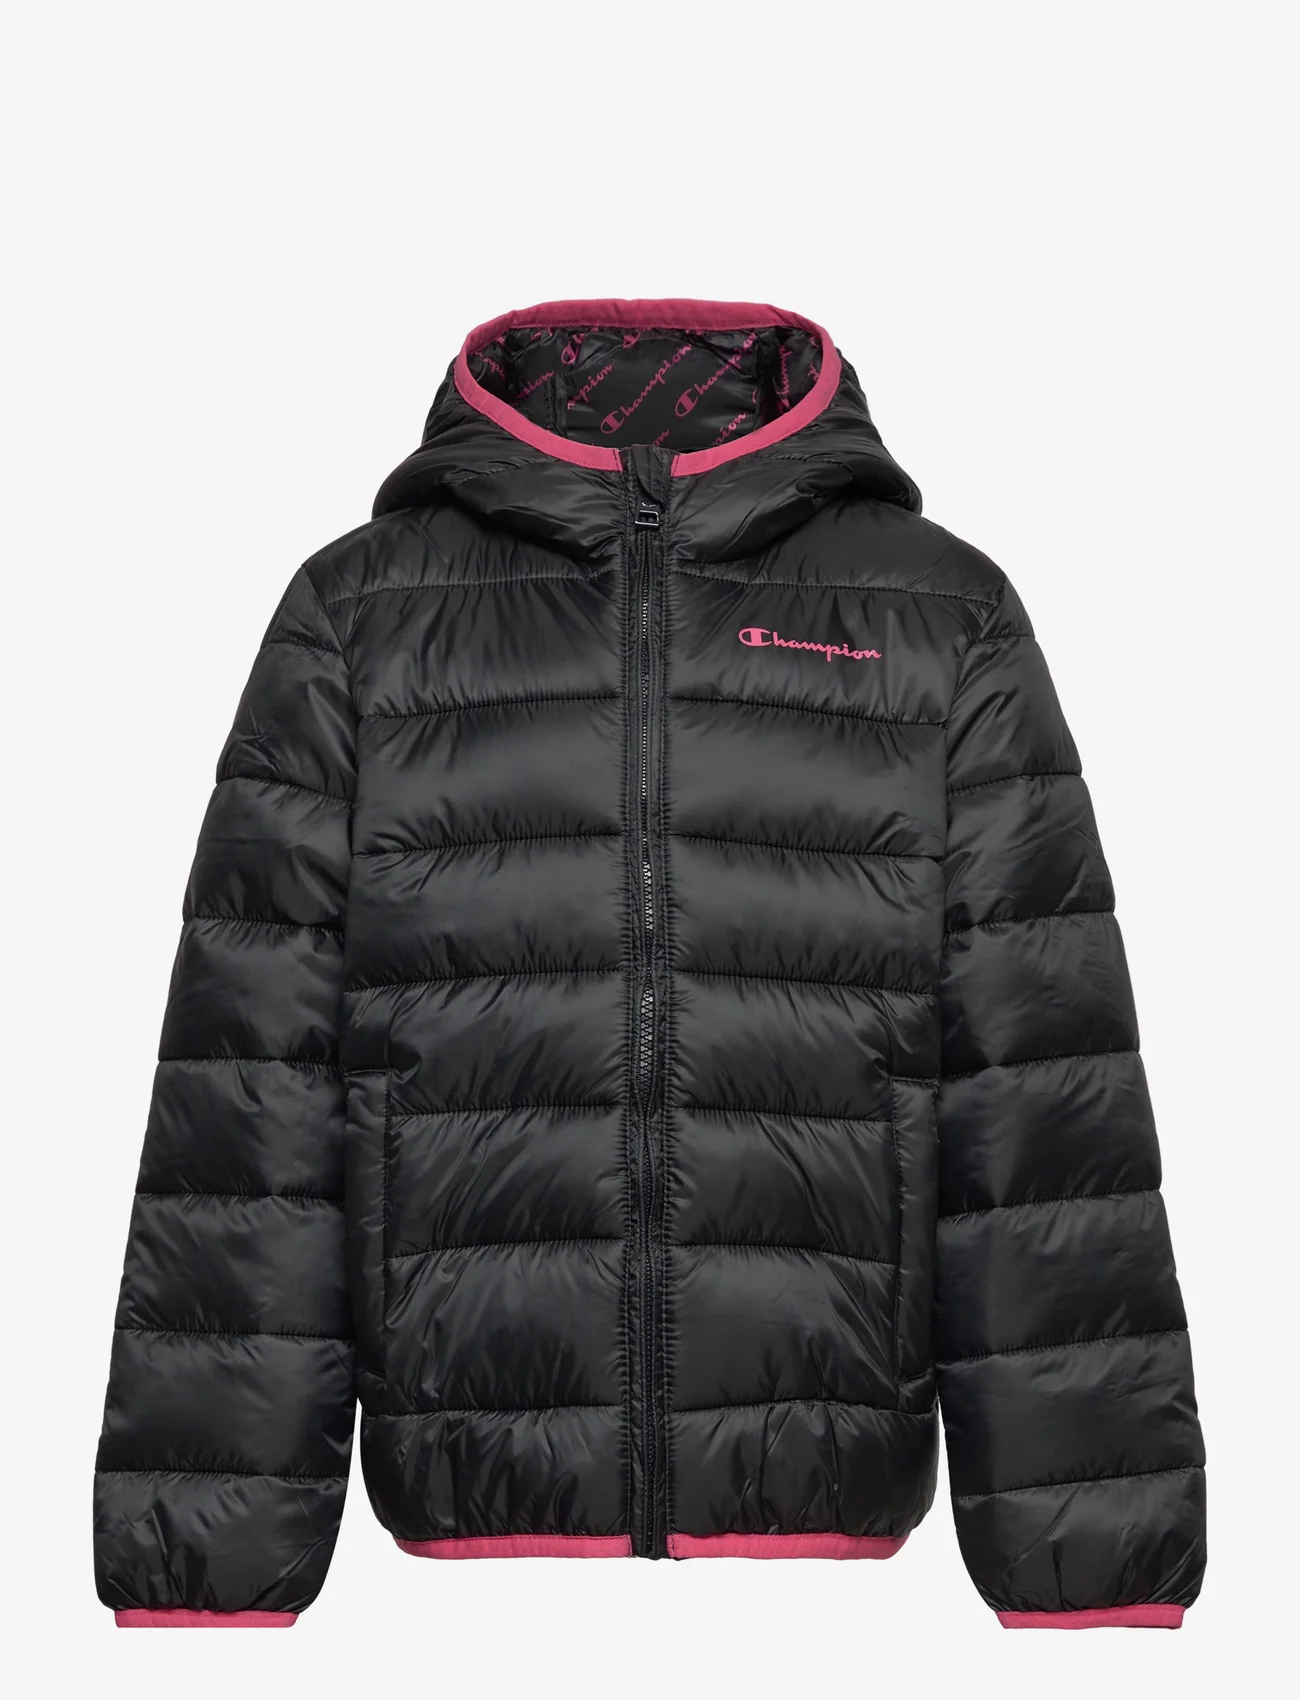 Champion - Hooded Jacket - insulated jackets - black beauty - 0